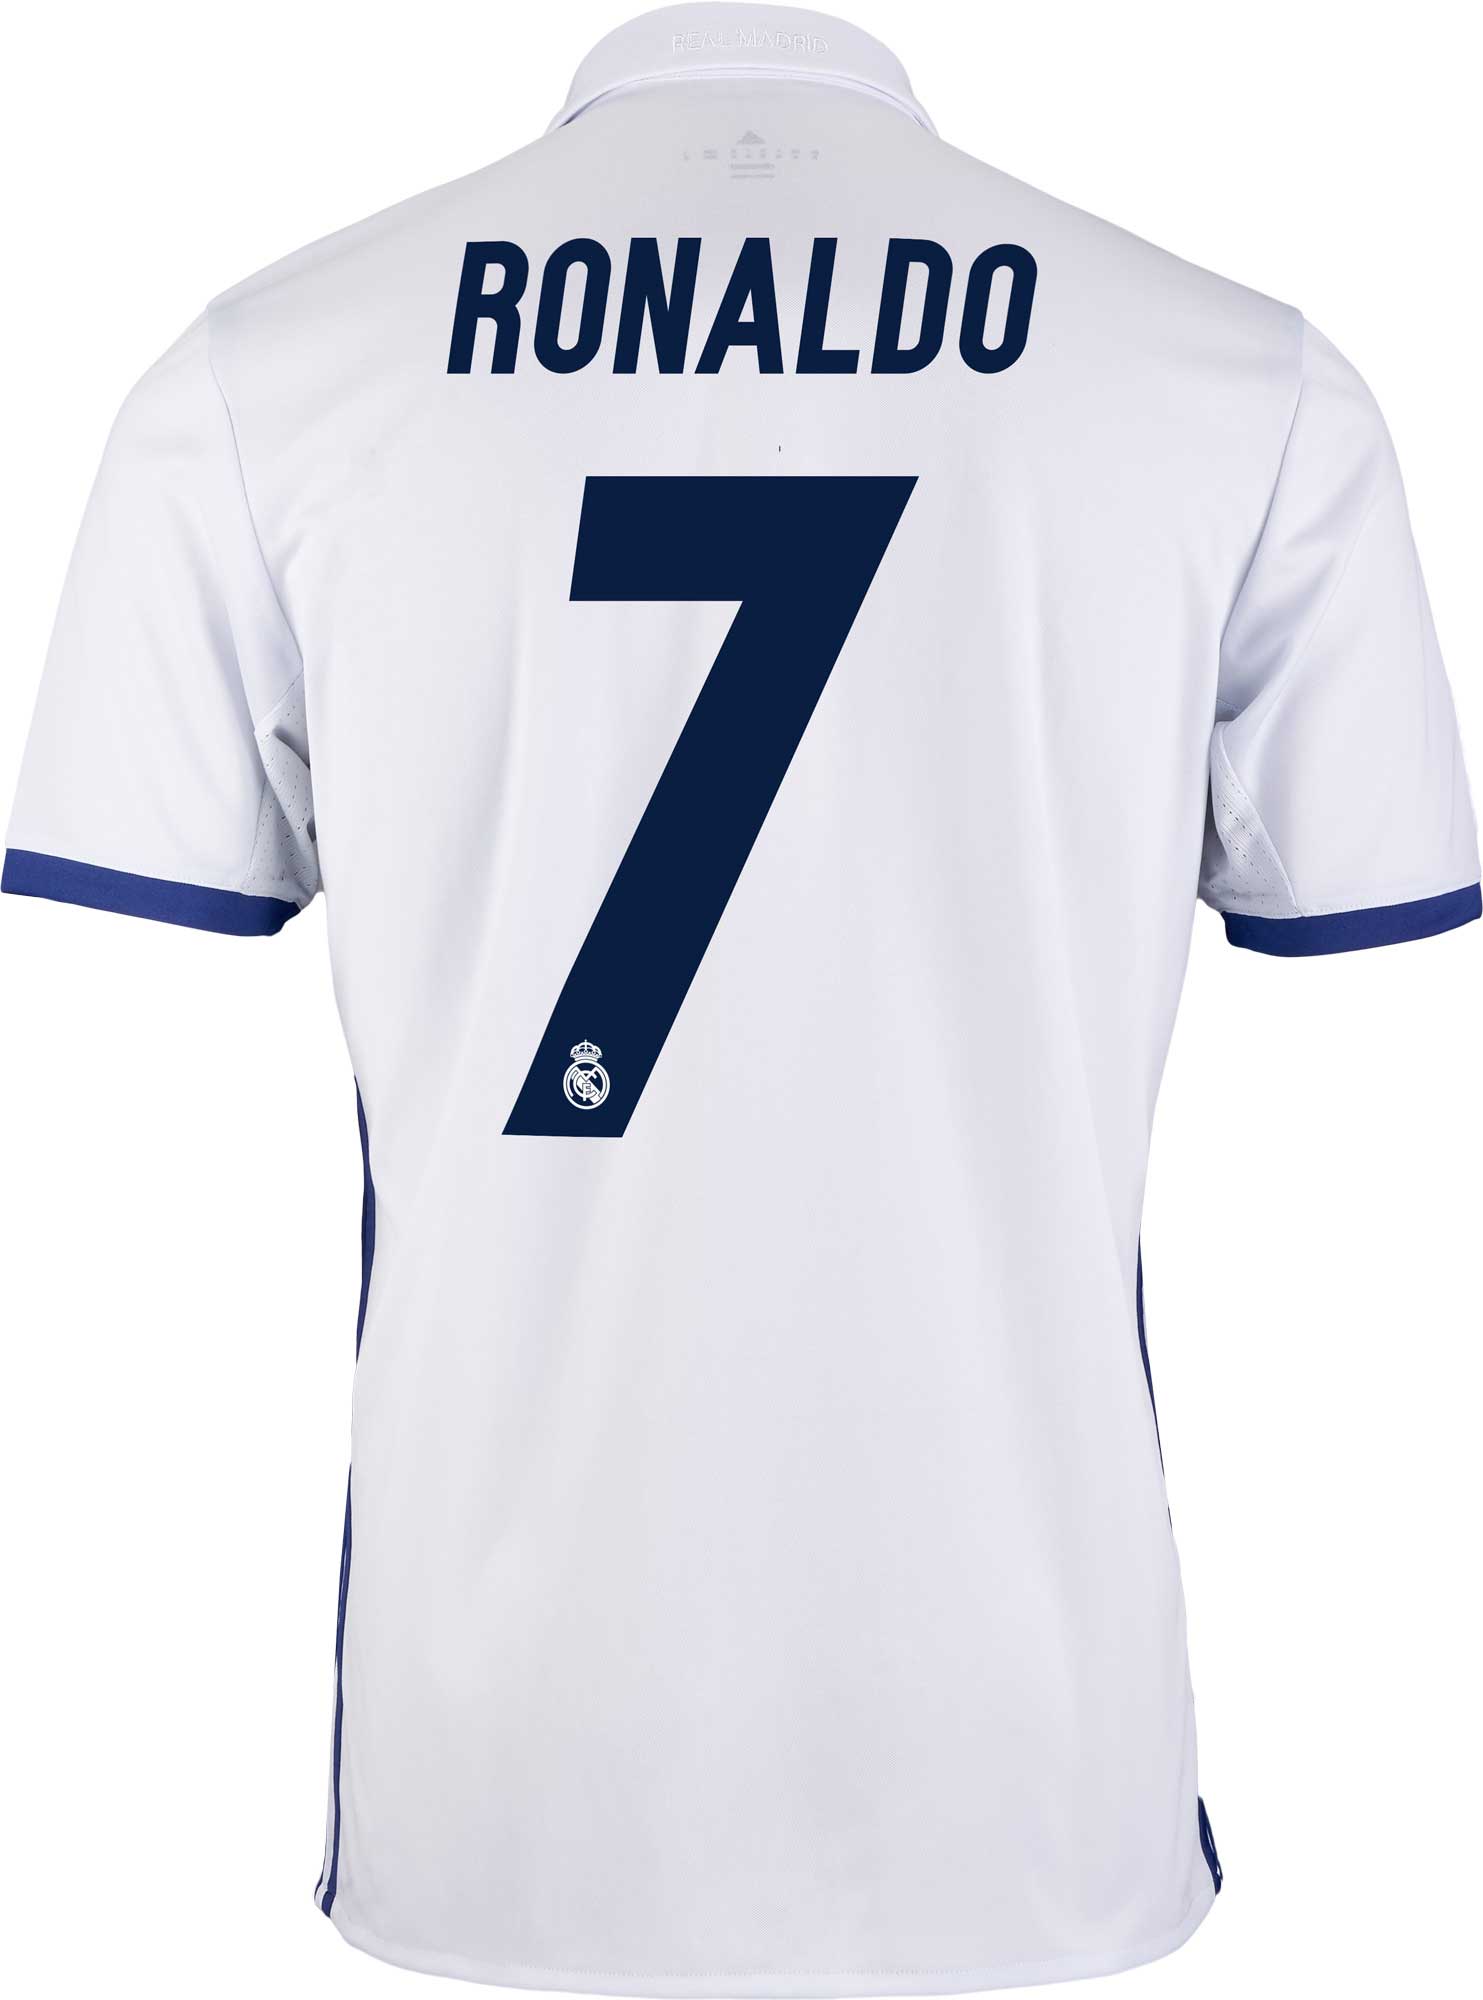 ronaldo's jersey